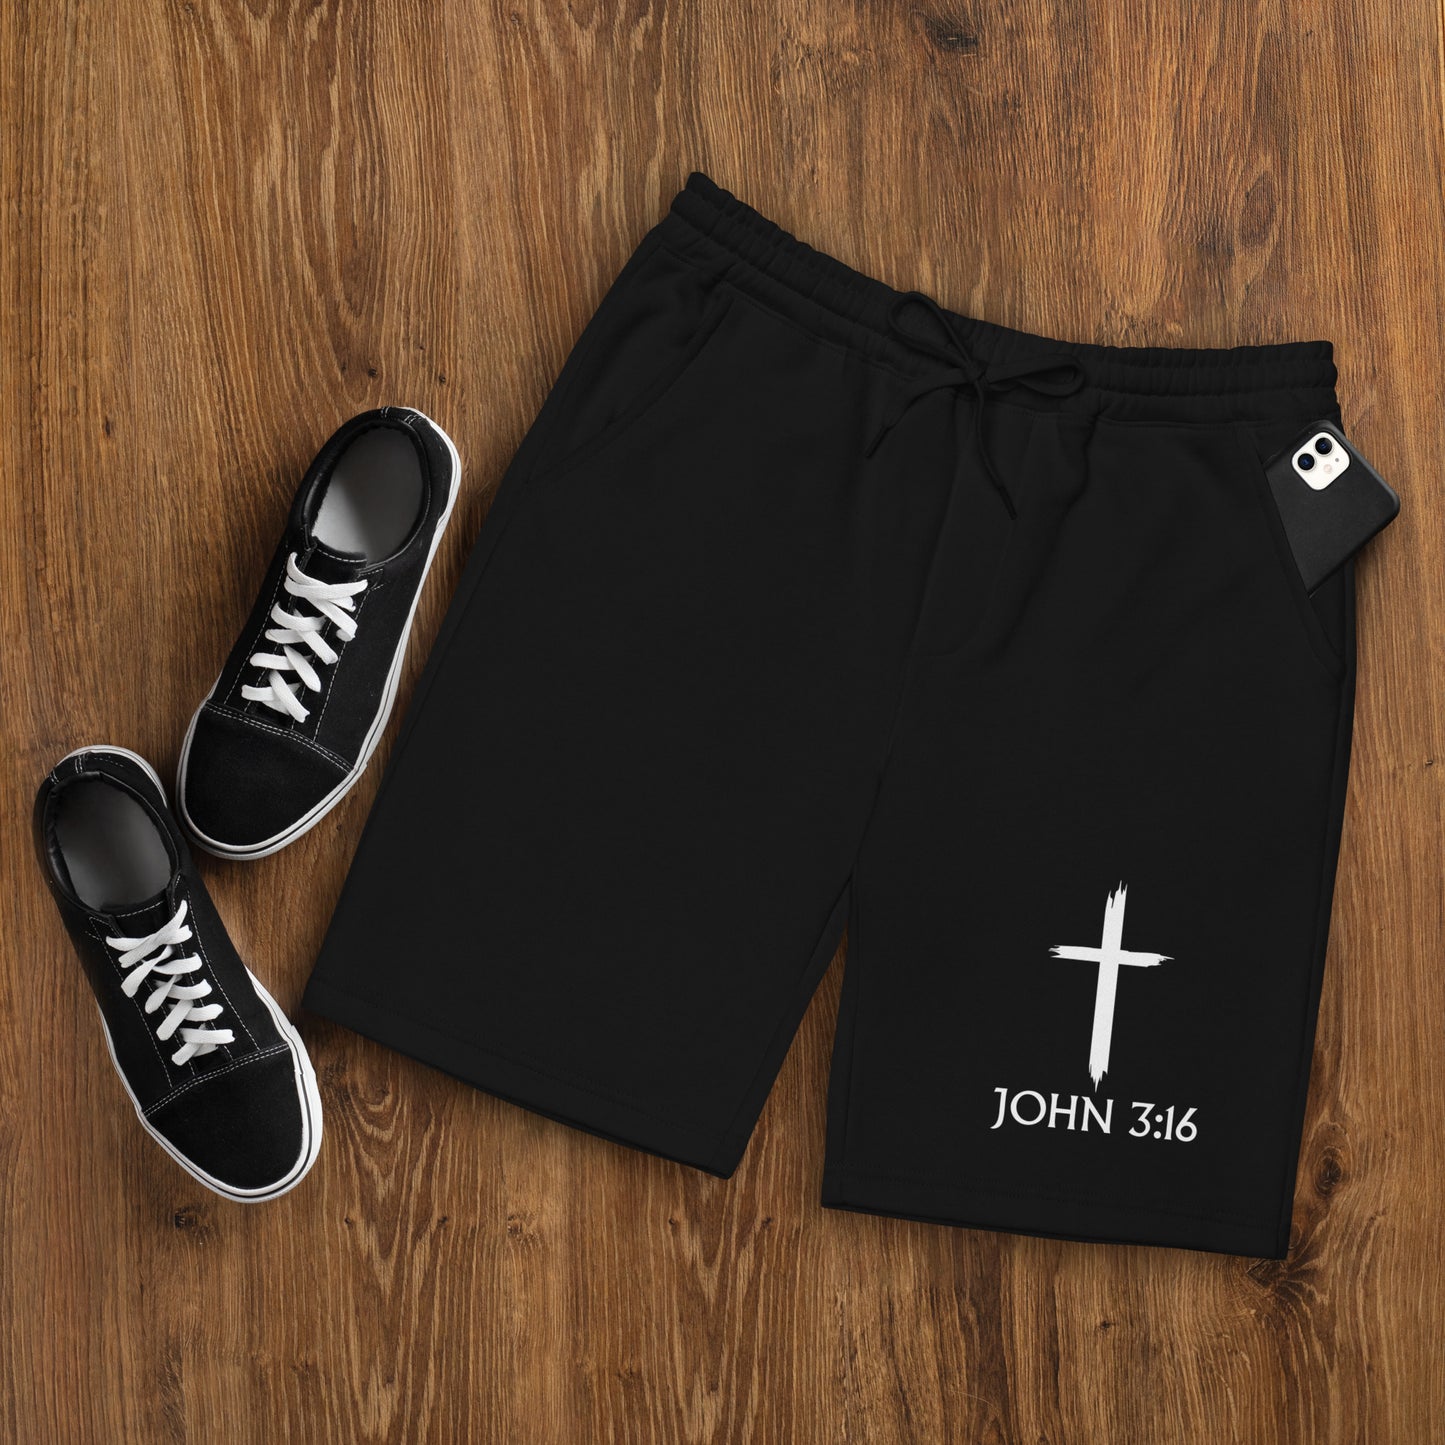 John 3:16 Men's Fleece Shorts